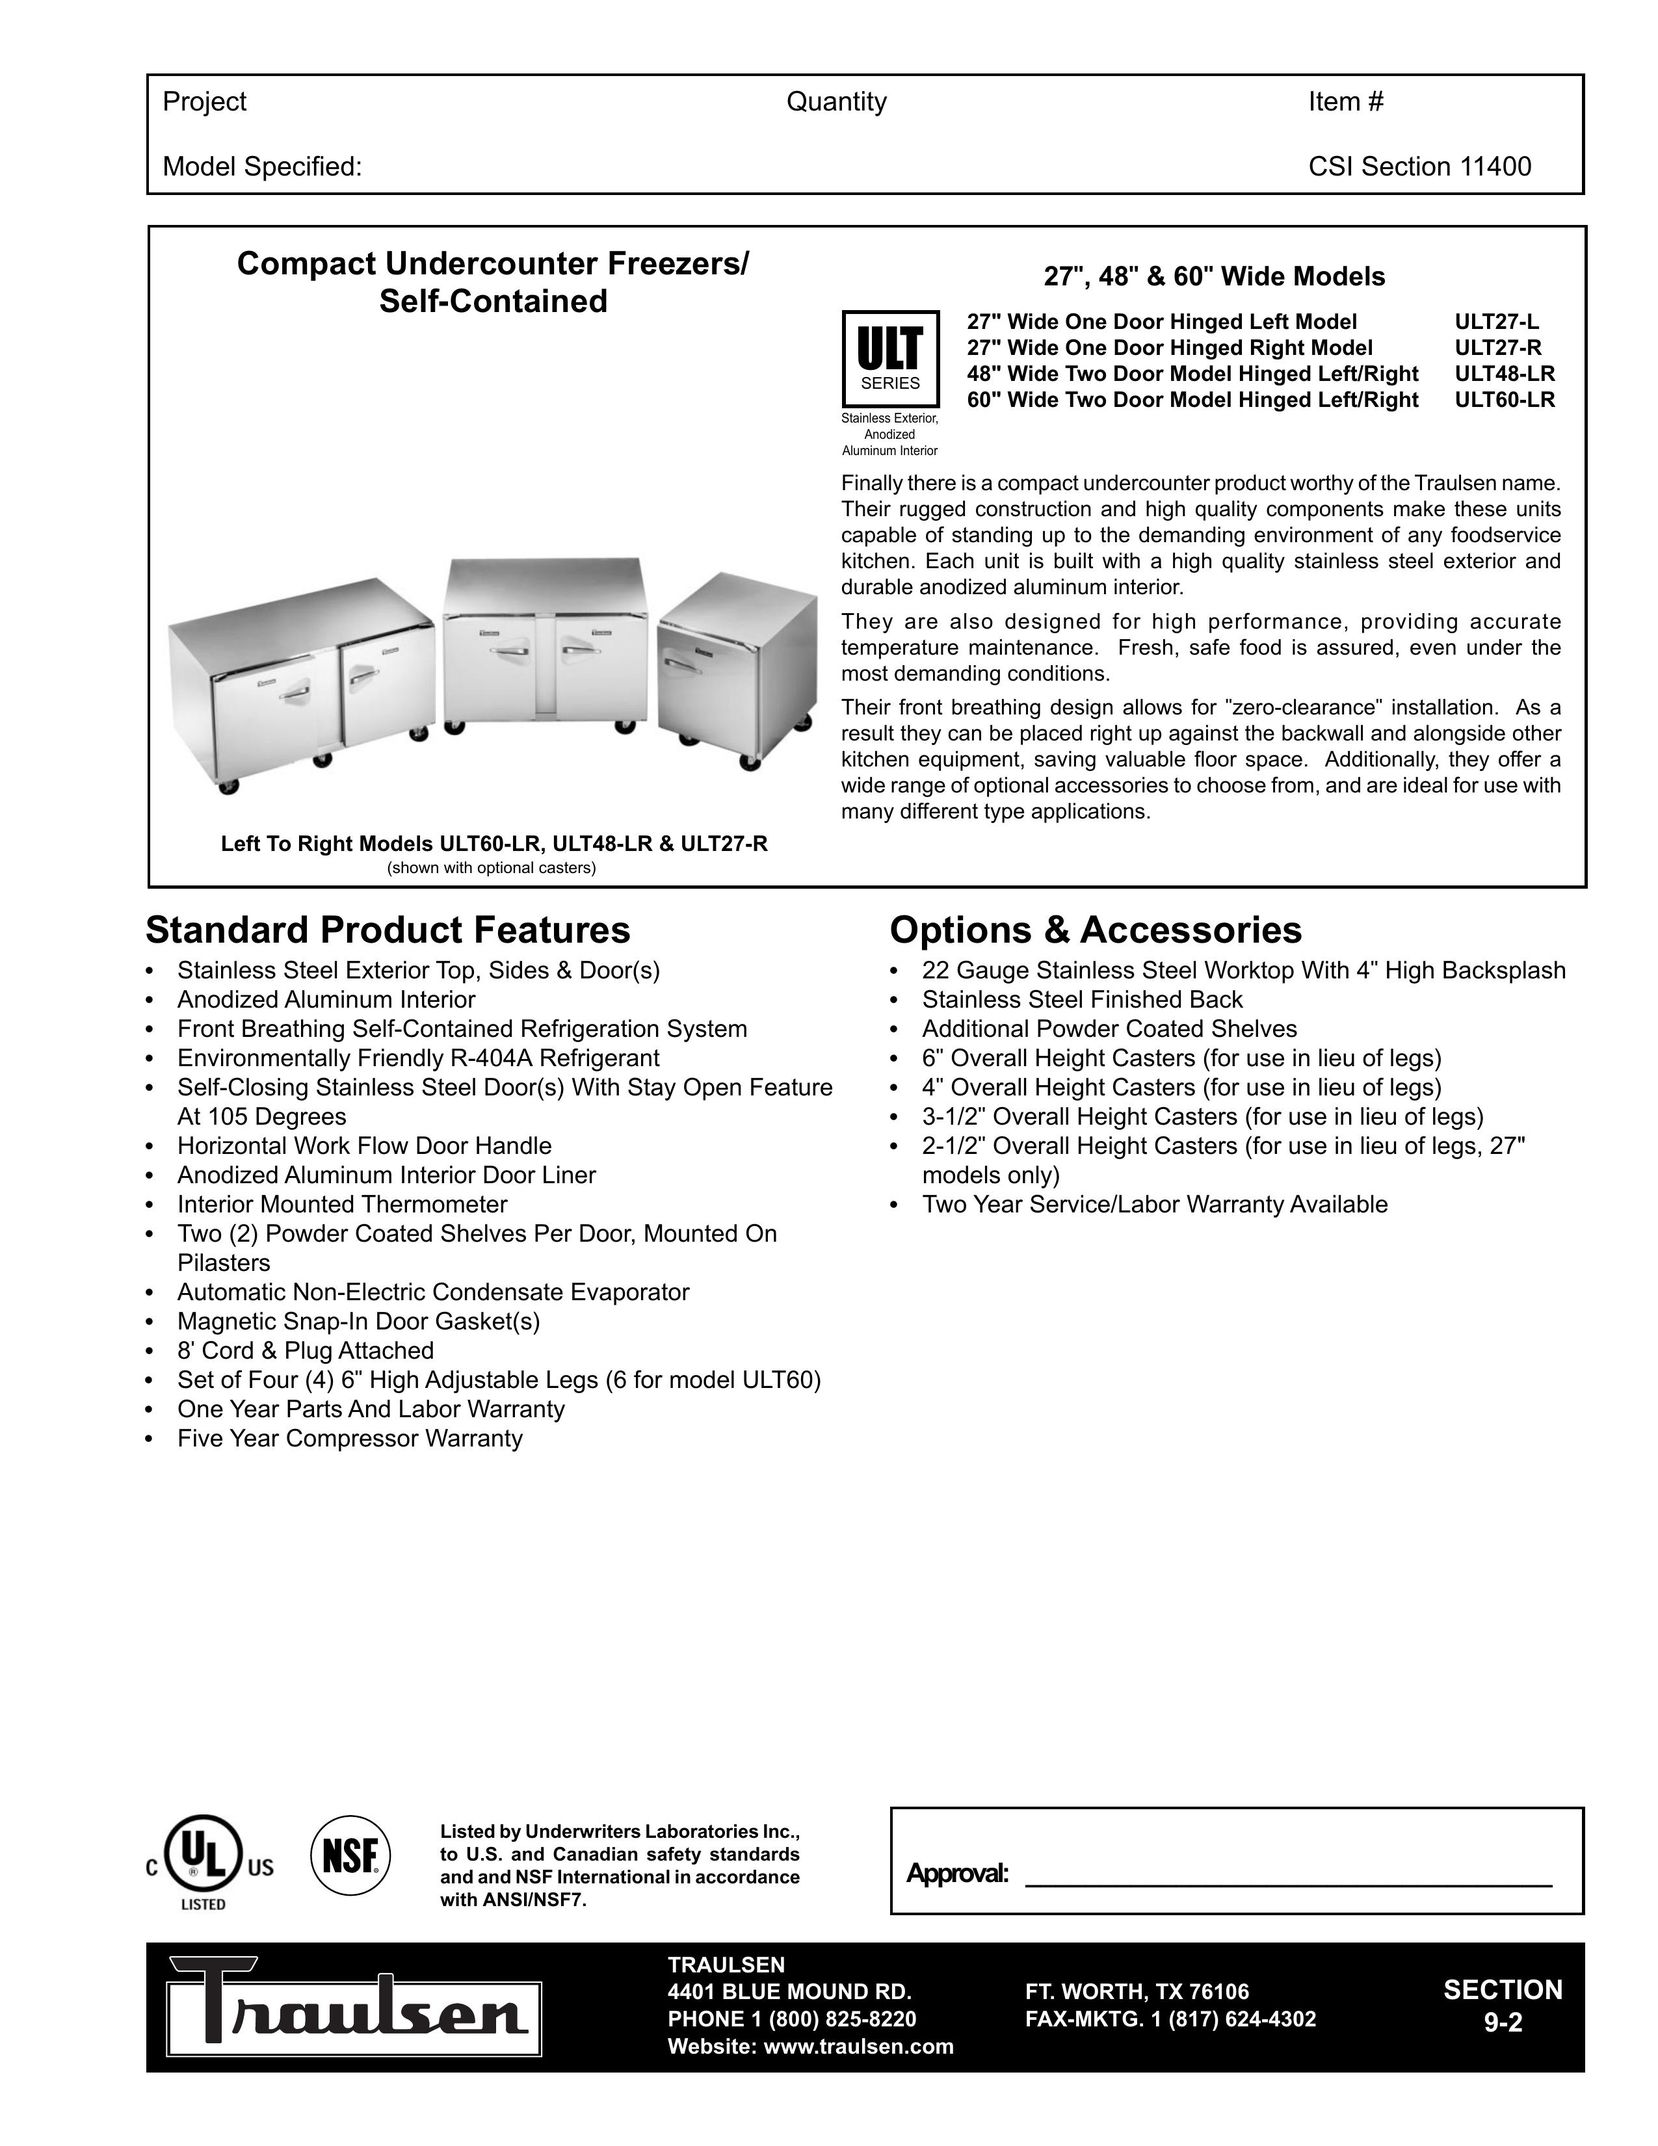 Traulsen ULT27-R Freezer User Manual